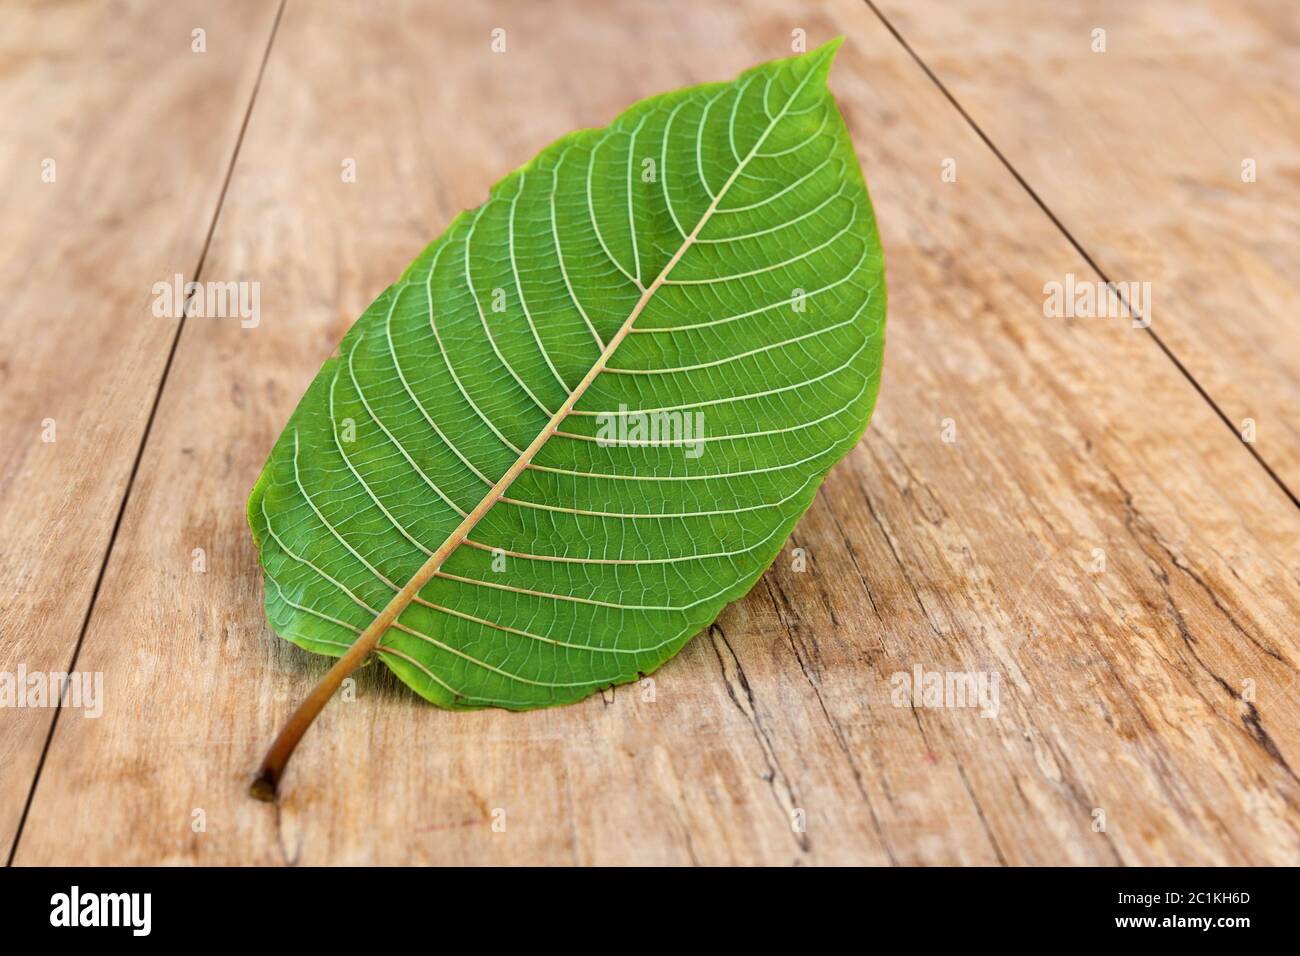 Kratom leaf on wooden table. Stock Photo